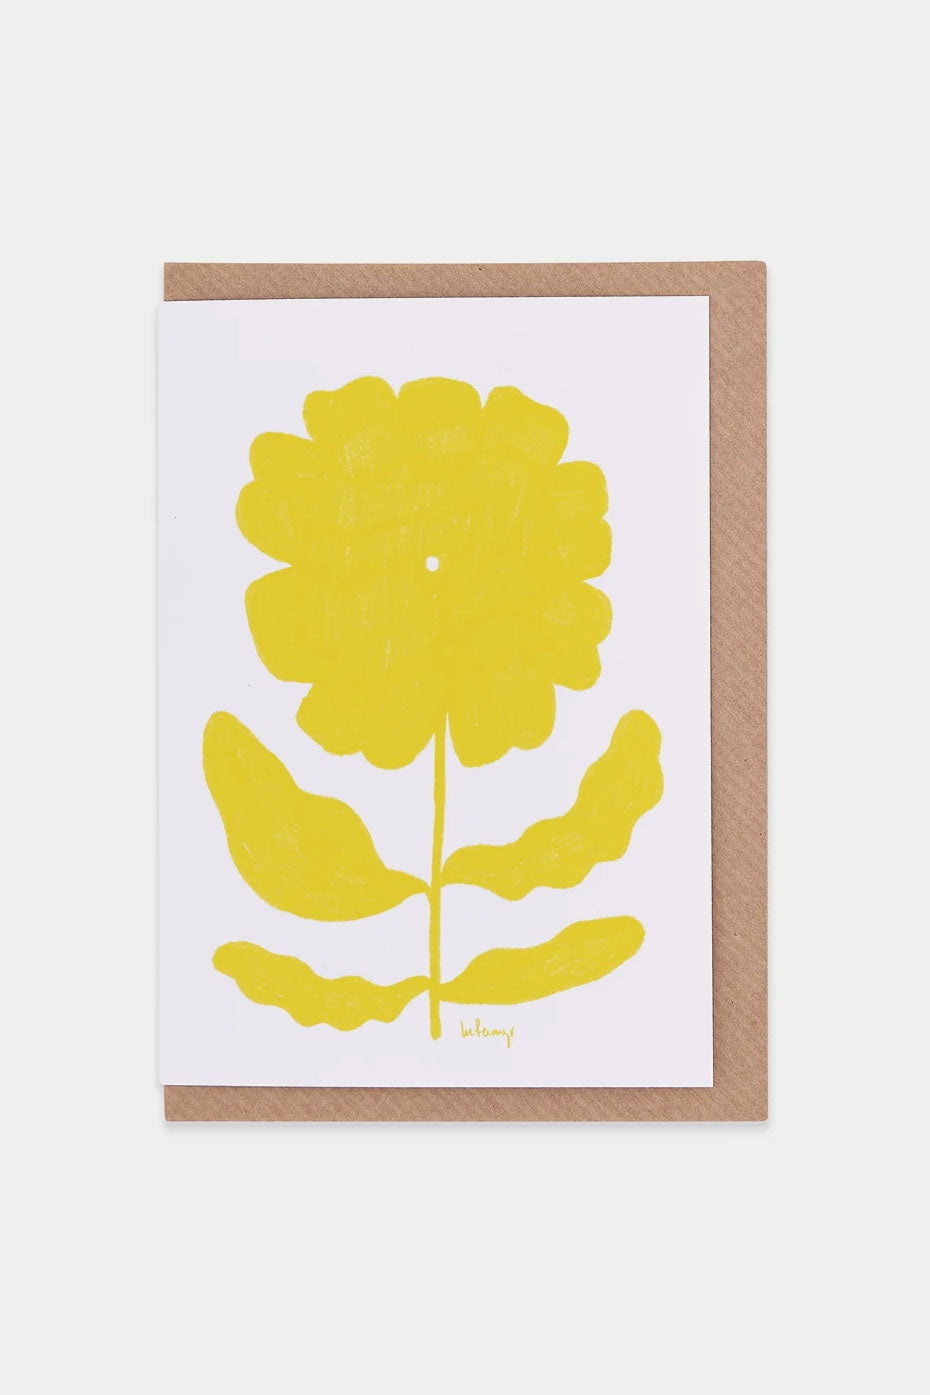 evermade-yellow-hug-greetings-card